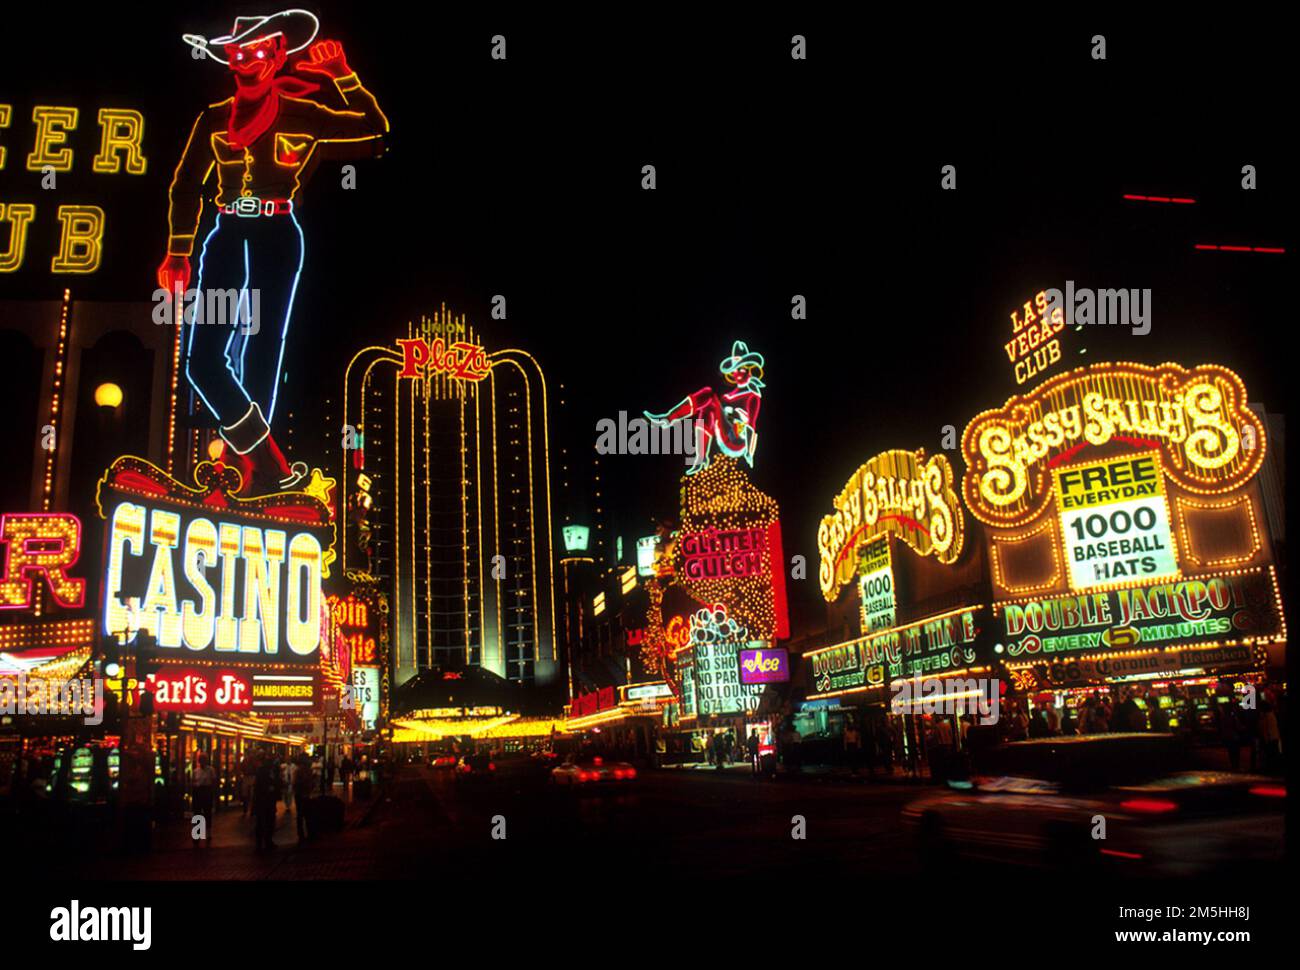 Las Vegas Strip - classica Las Vegas notturna. Una varietà di colori  illumina la città in questa immagine esemplare di Las Vegas di notte.  Località: Nevada (36,098° N 115,173° W Foto stock - Alamy